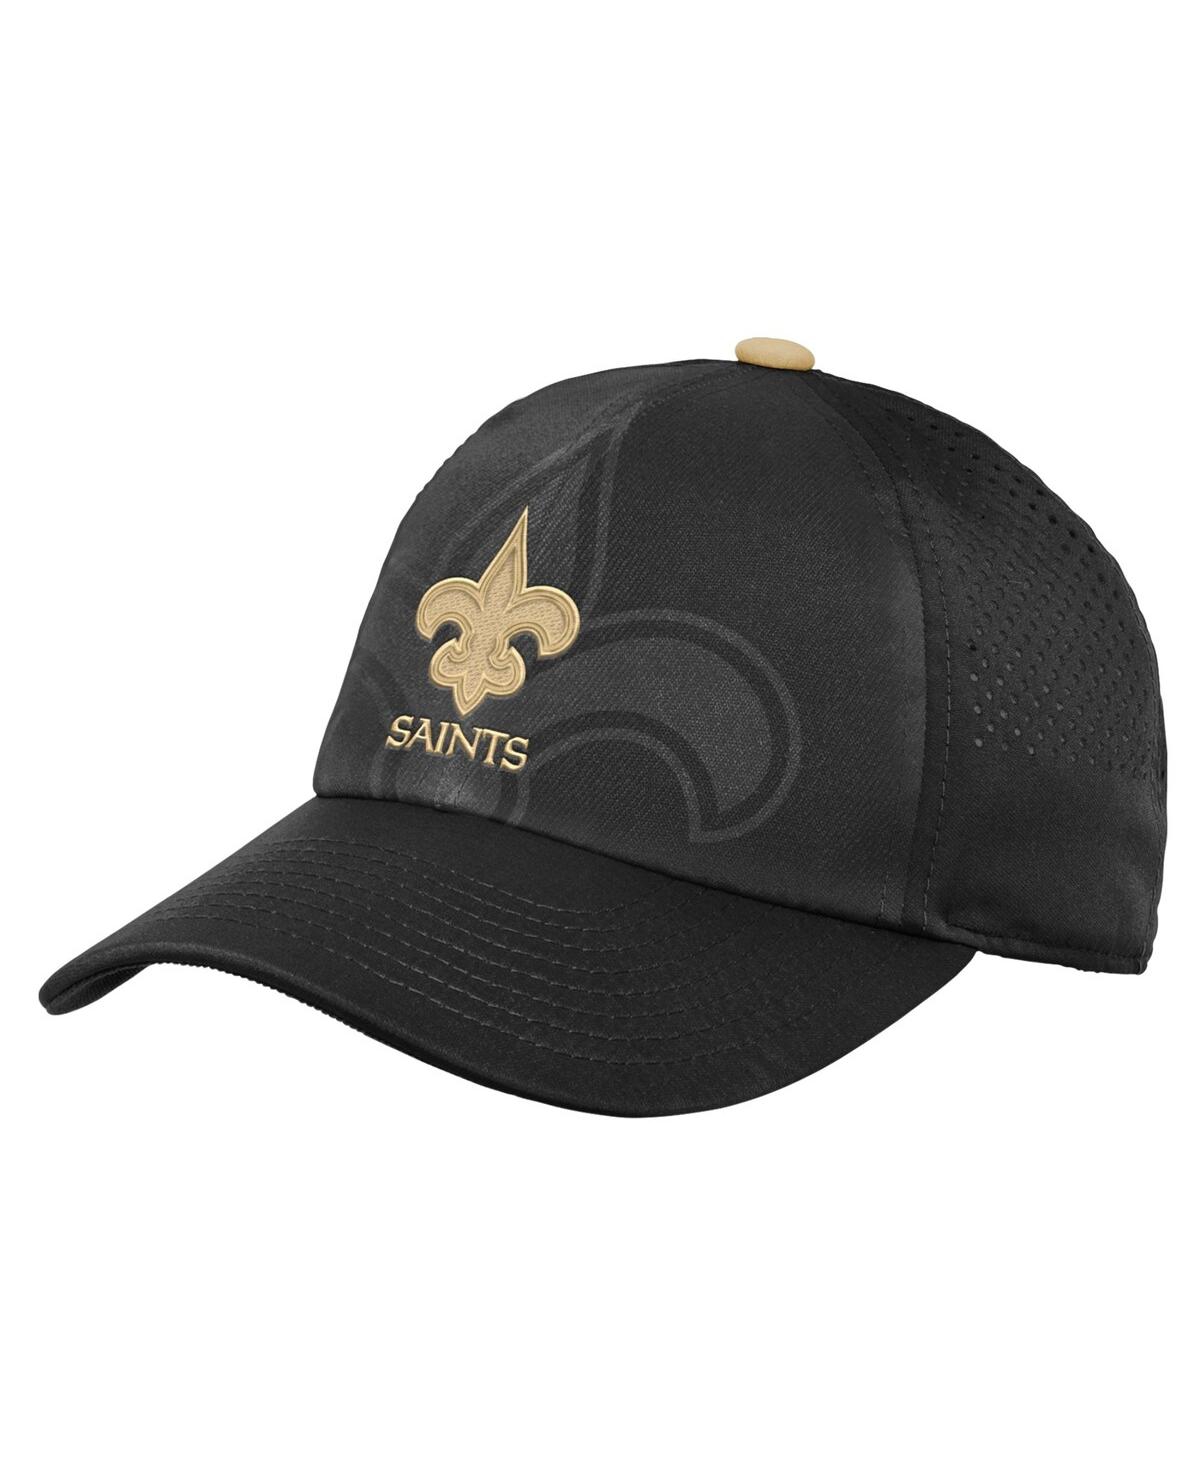 Outerstuff Kids' Big Boys And Girls Black New Orleans Saints Tailgate Adjustable Hat